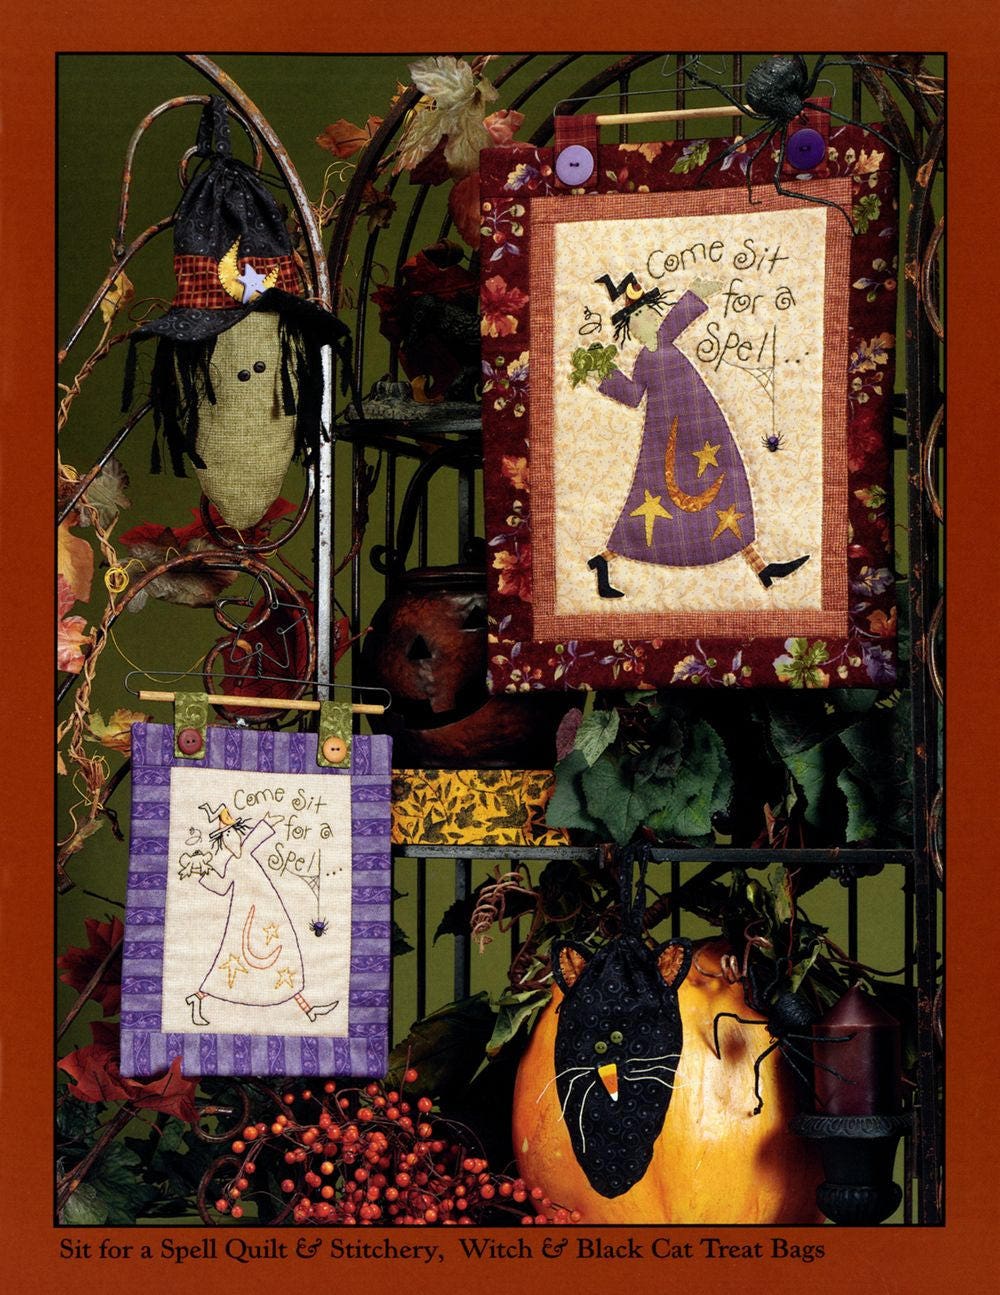 Acorn Hollow Quilt Pattern Book by Nancy Halvorsen of Art to Heart